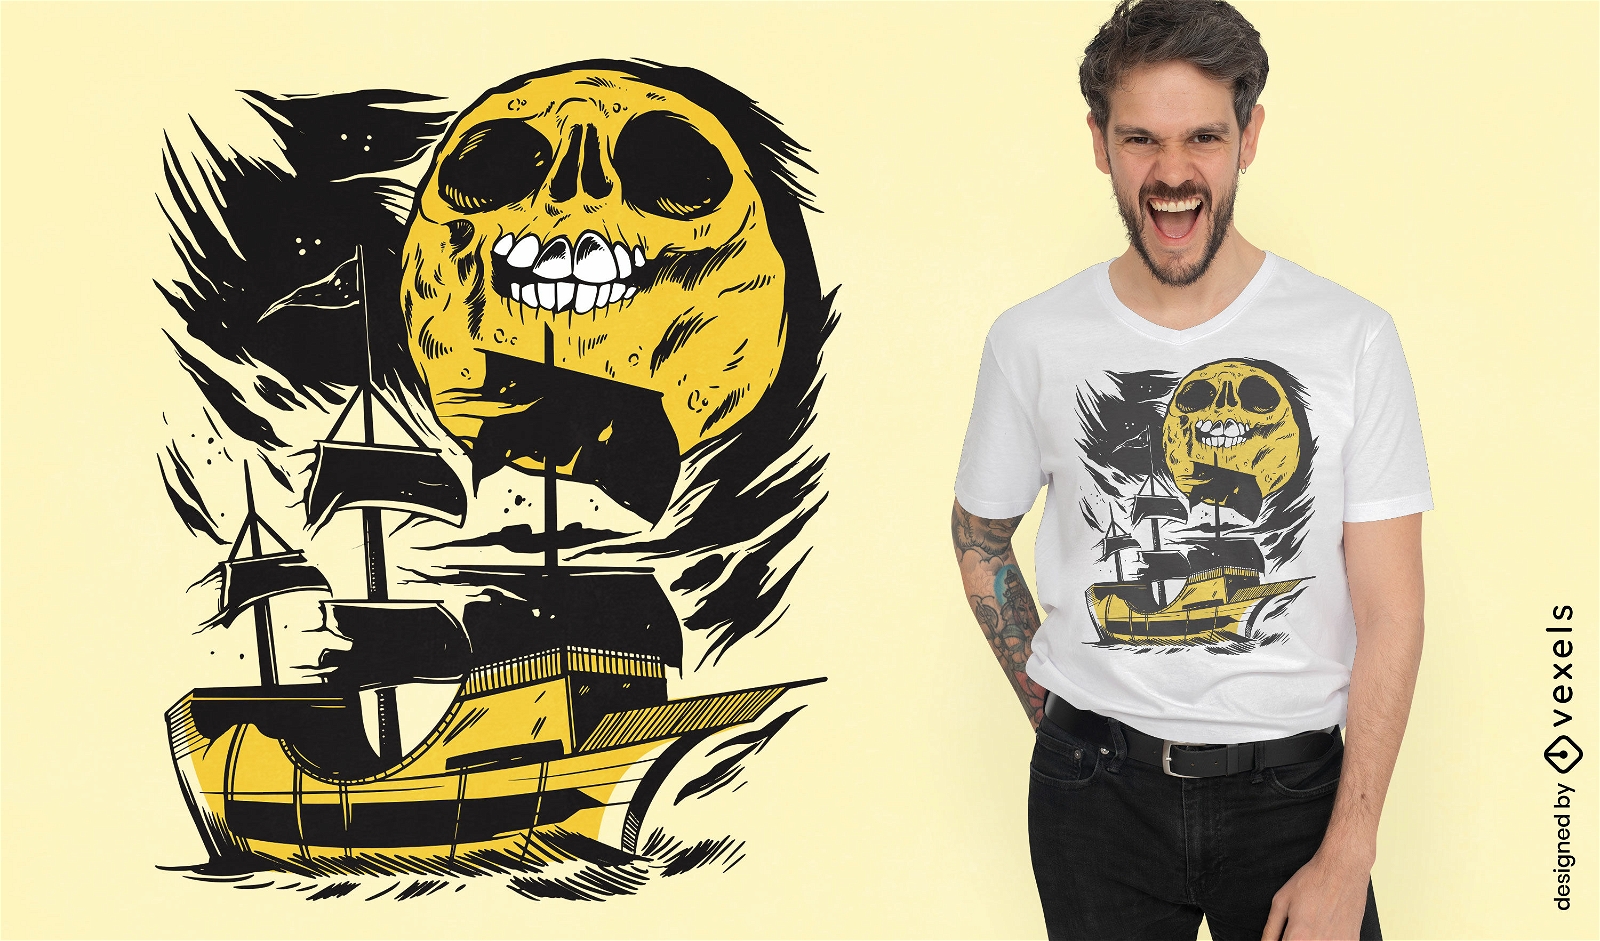 Ship and skull moon t-shirt design